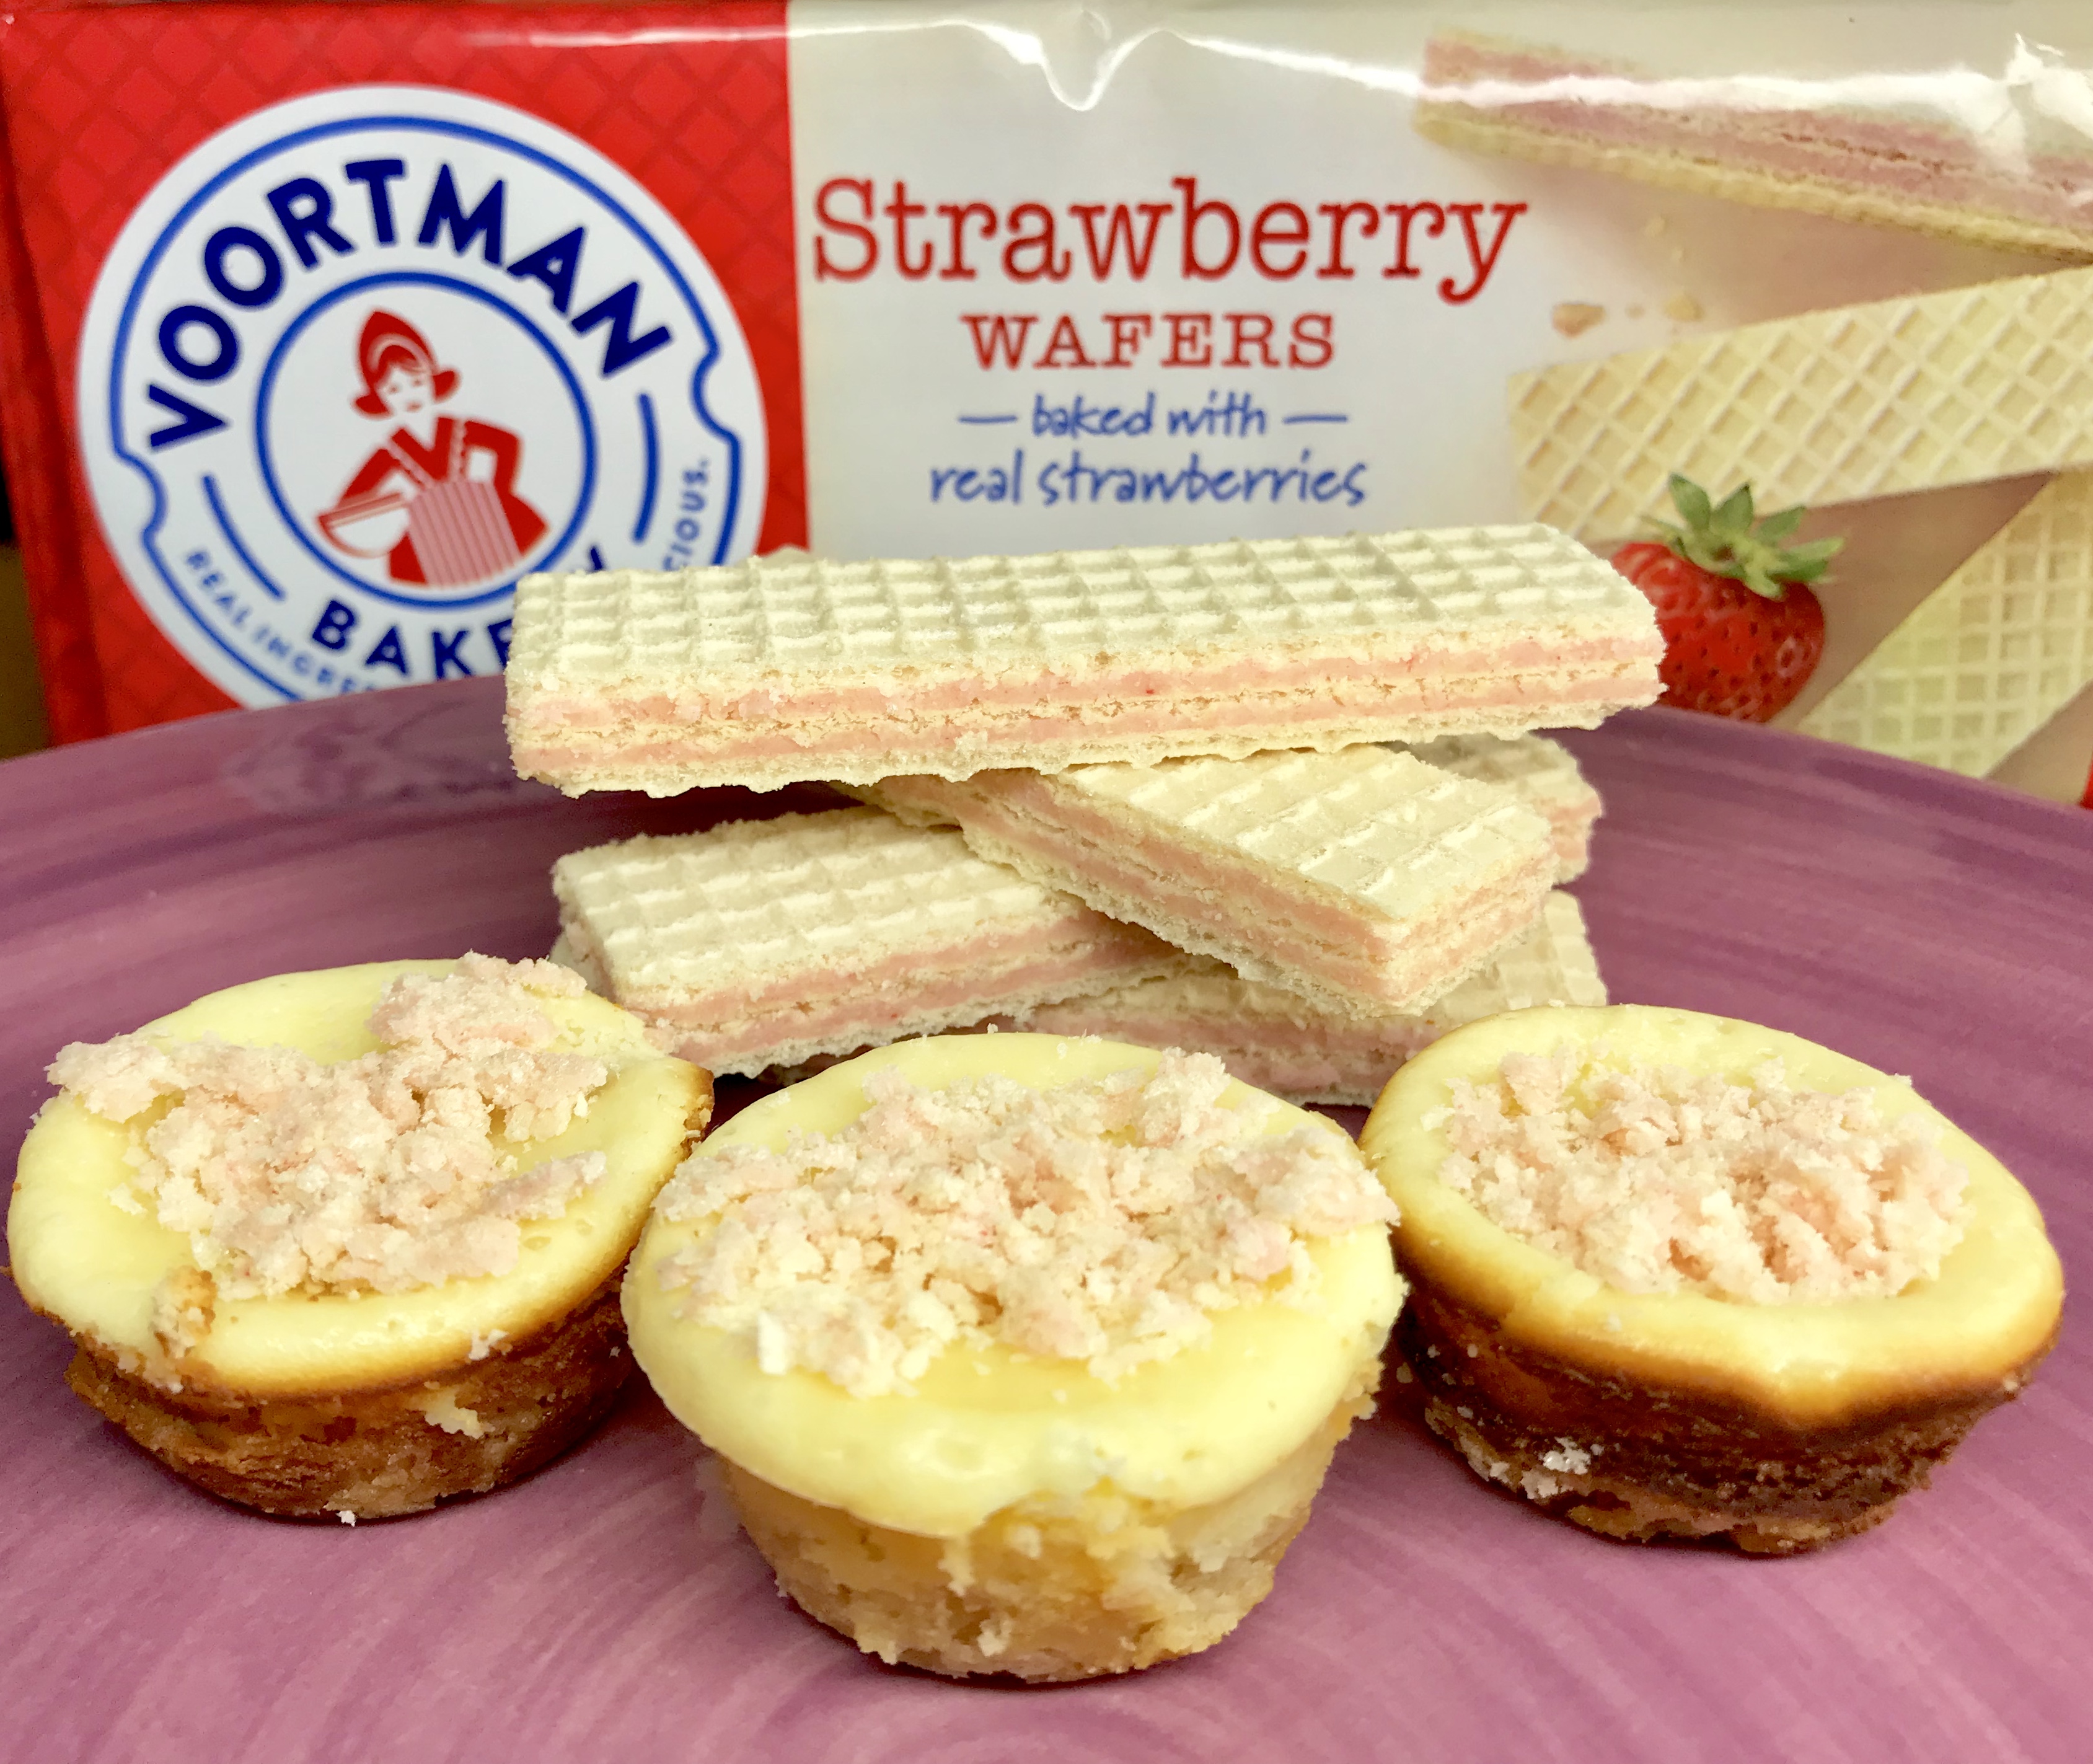 Voortman Strawberry Wafer Cheesecake Bites #Voortman #strawberry #cheesecake #baking #blogger #blog #food #foodie #recipe #ad